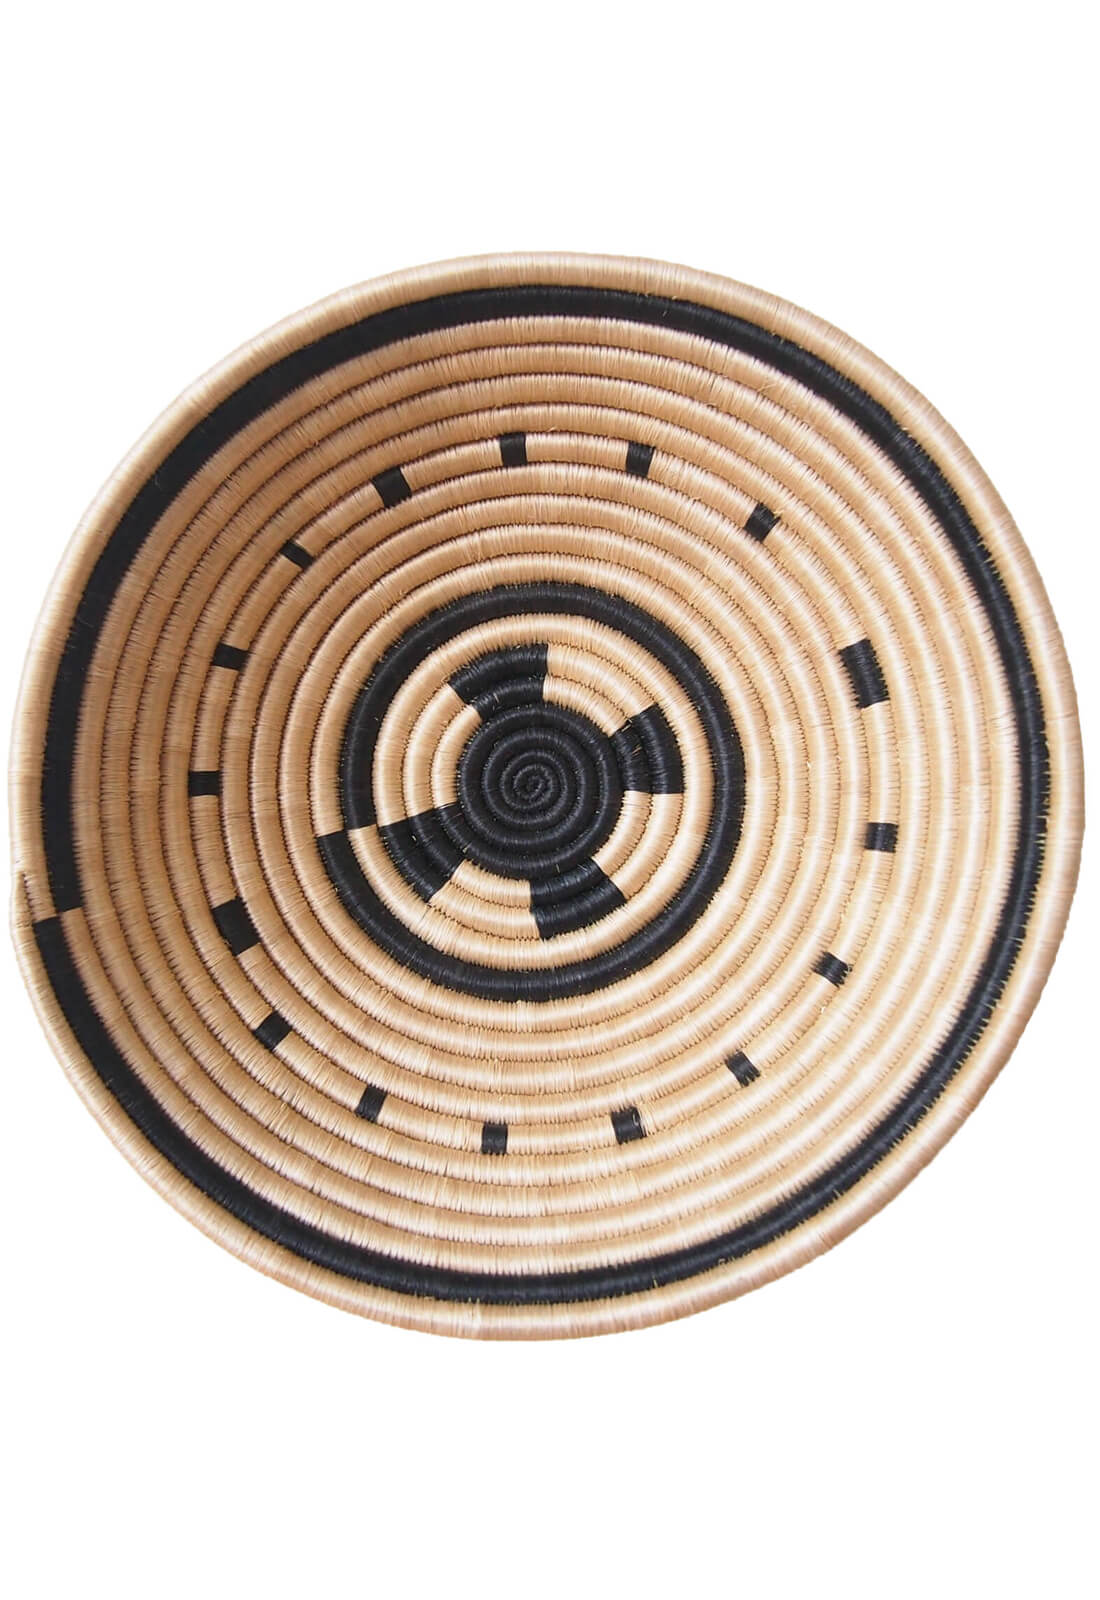 Hand Woven Kaduha Basket - Tan and Black